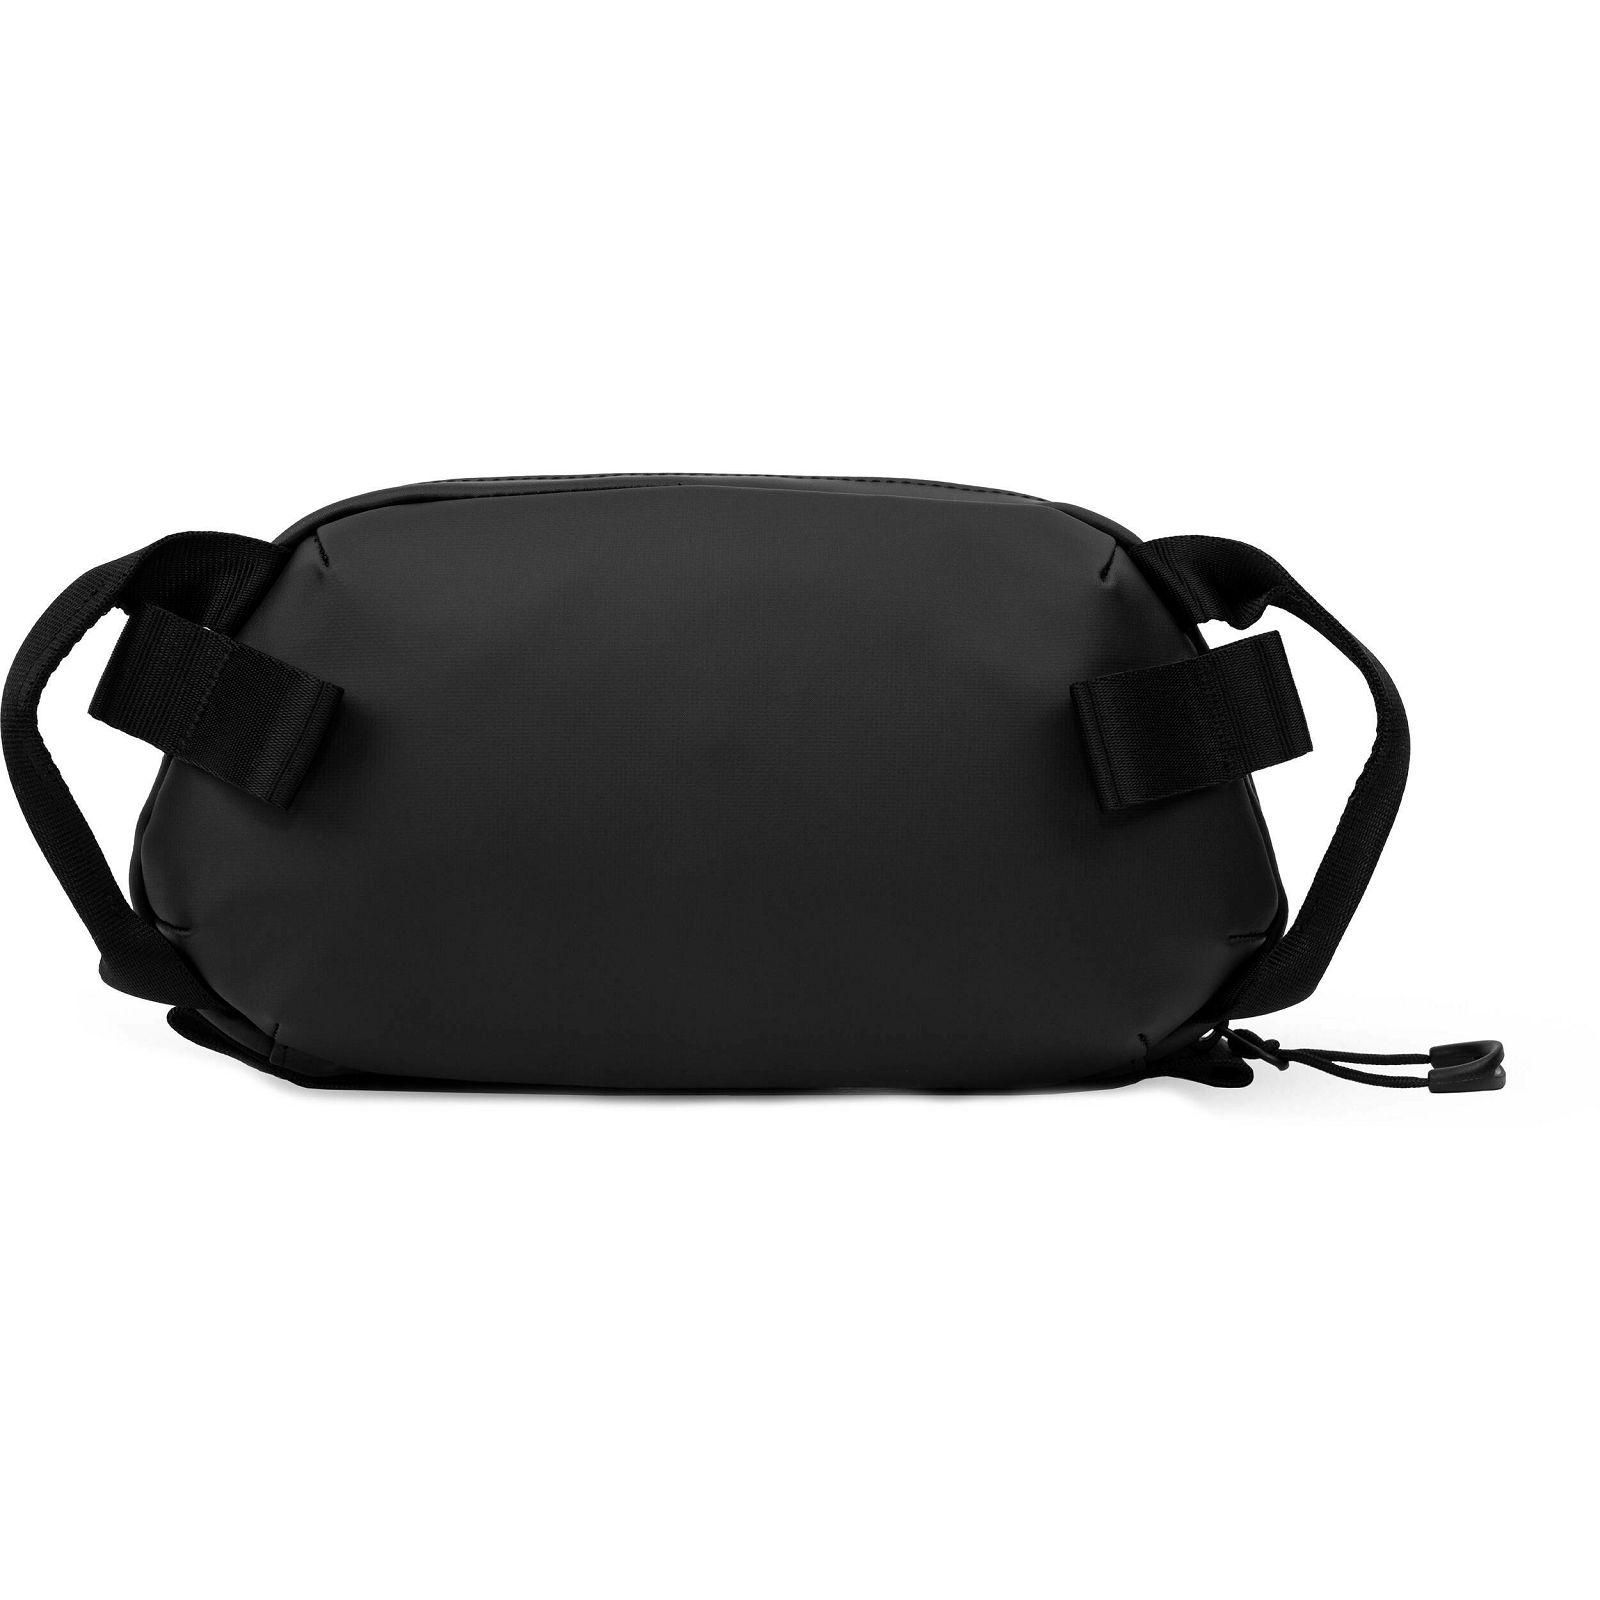 Wandrd Tech Bag Medium Black 2.0 (TP-MD-BK-2)